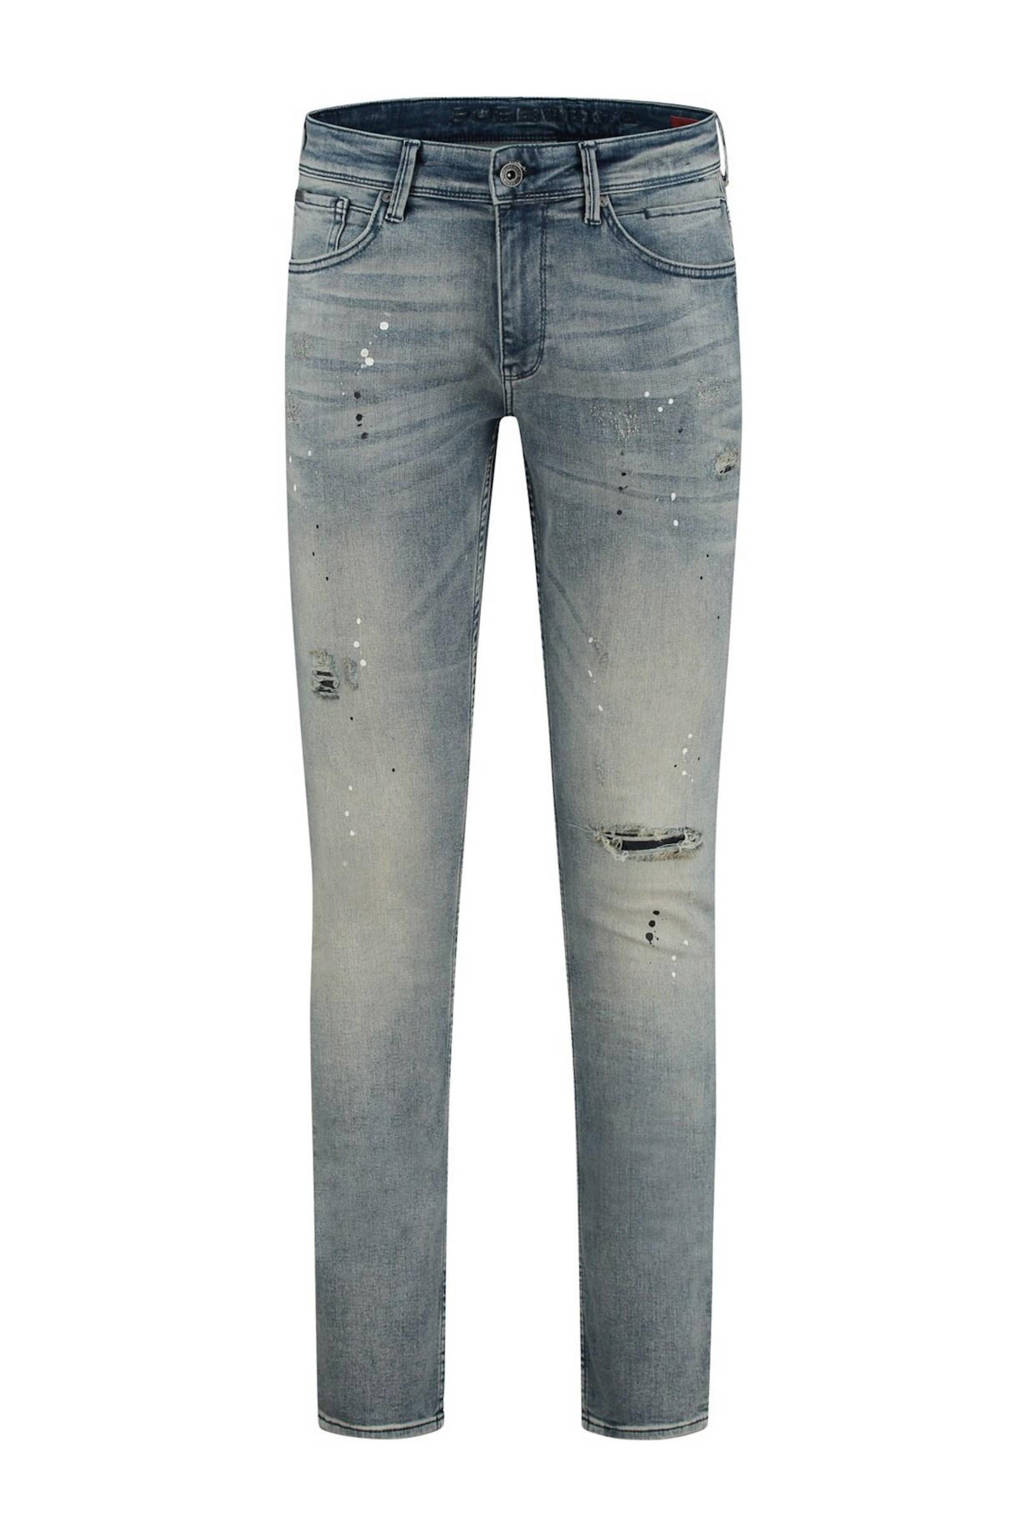 Purewhite regular fit jeans denim green/blue